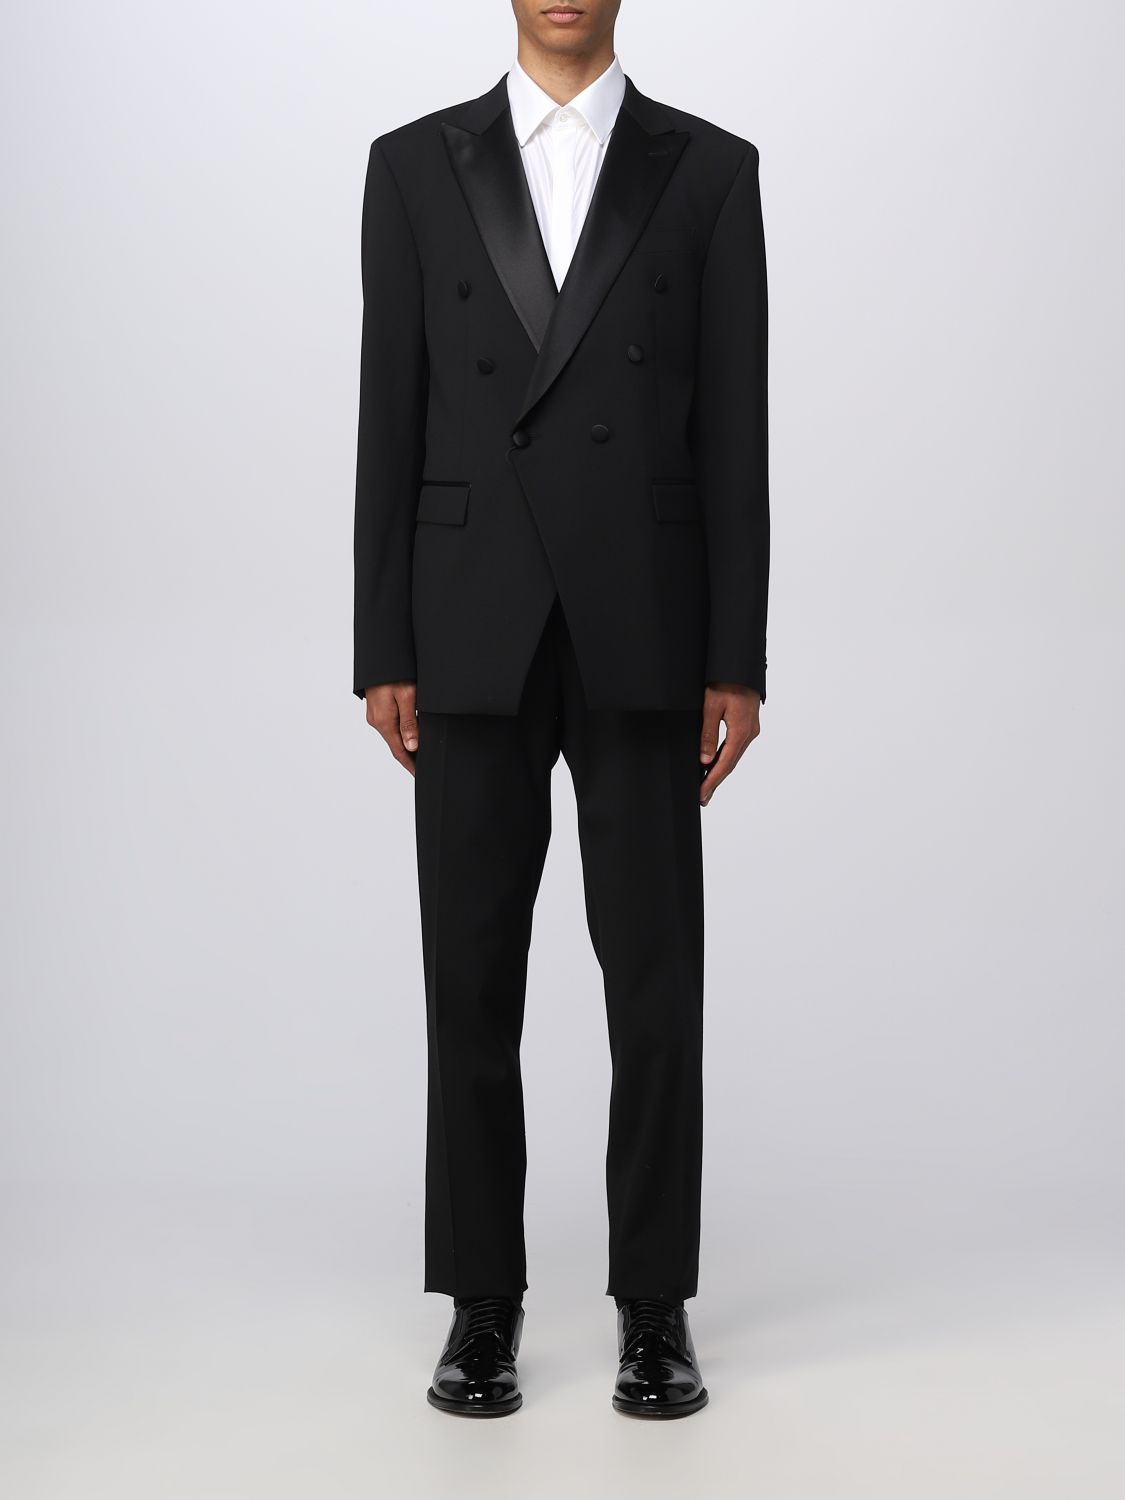 Volwassenheid Tub Clancy CORNELIANI: suit for man - Black | Corneliani suit 917T523198542 online on  GIGLIO.COM